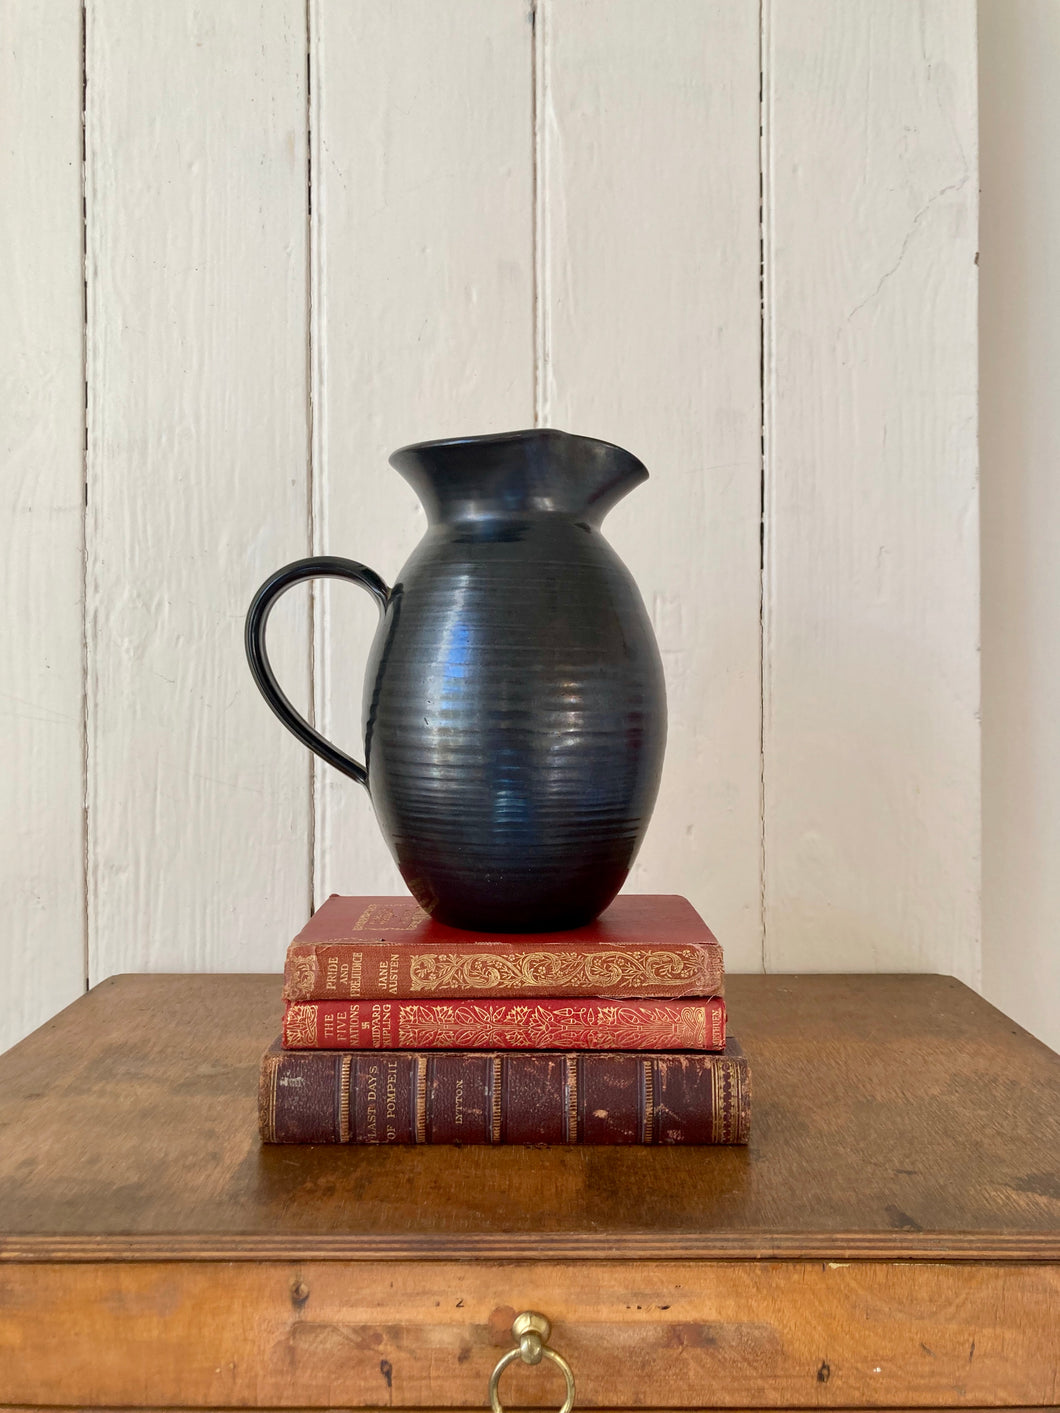 Prinknash Abbey Pottery, Gloucestershire large black ceramic jug